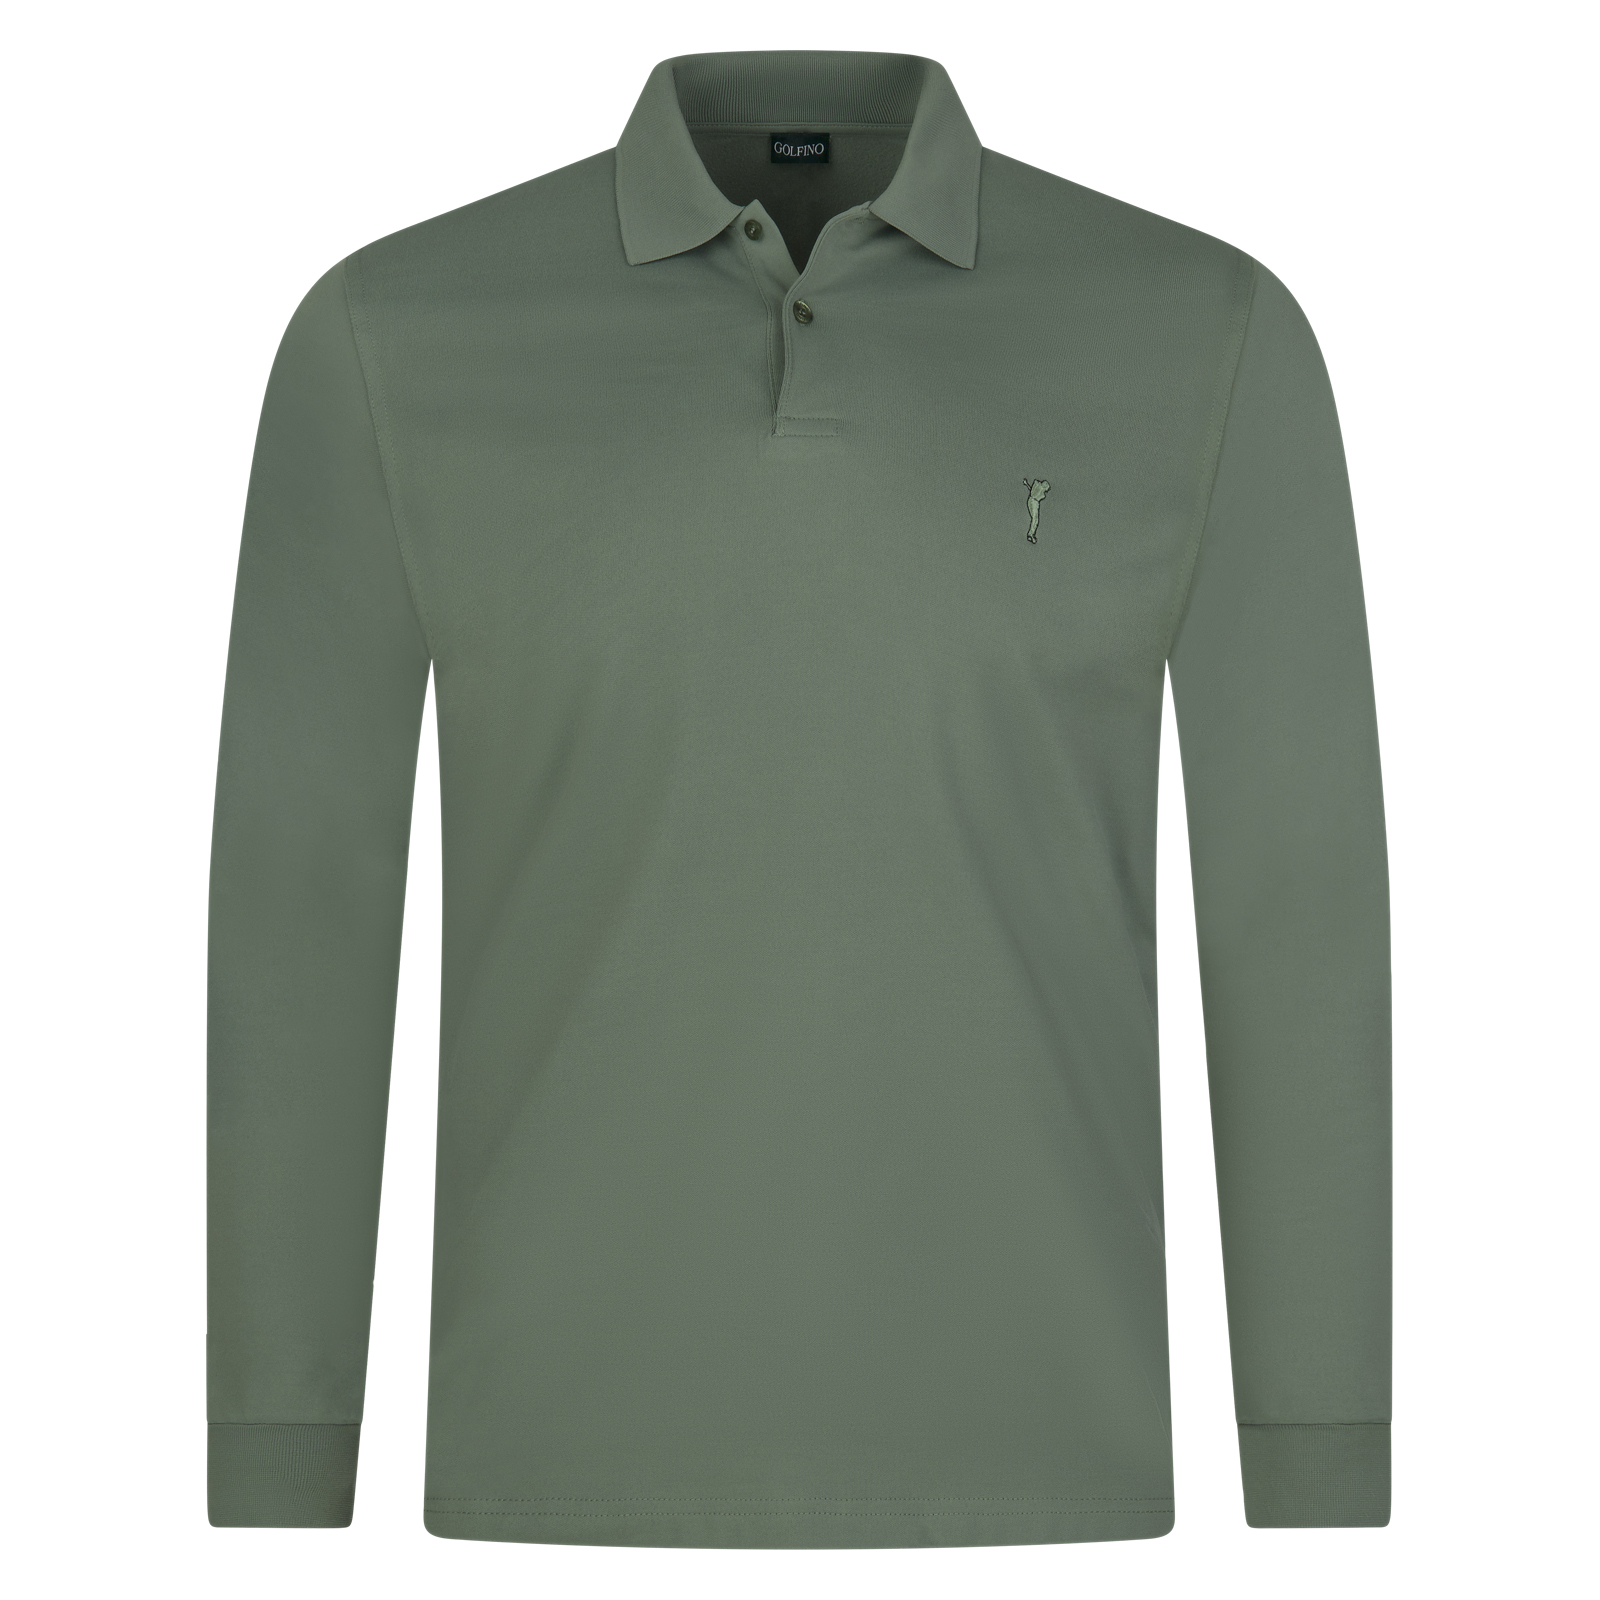 Men's classical long-sleeved golf polo shirt